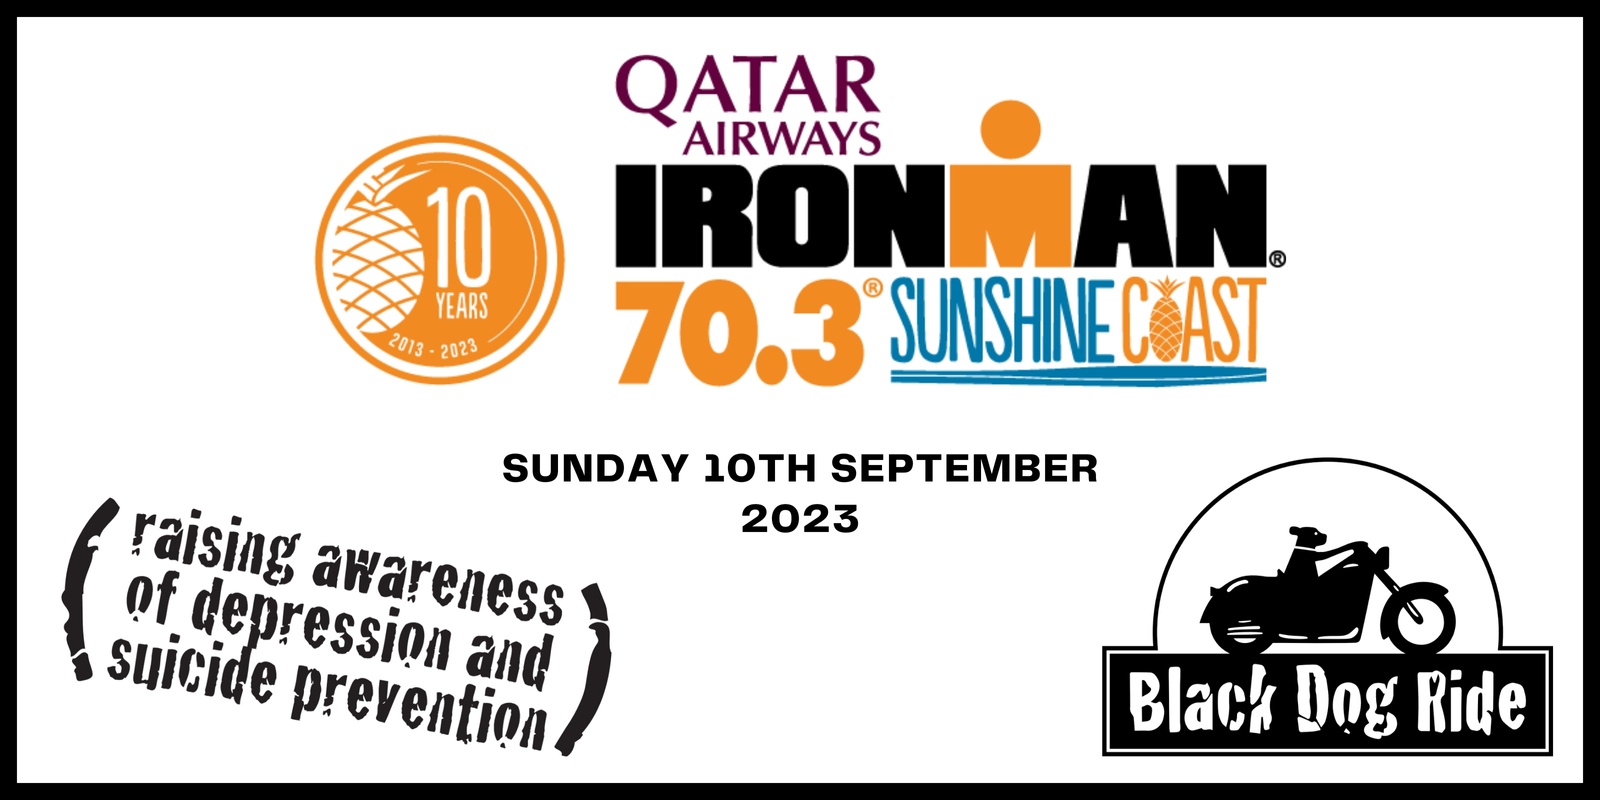 Banner image for Black Dog Ride - Qatar Airways IRONMAN 70.3 Sunshine Coast Moto Volunteers - 11 Tickets Only - FREE!!